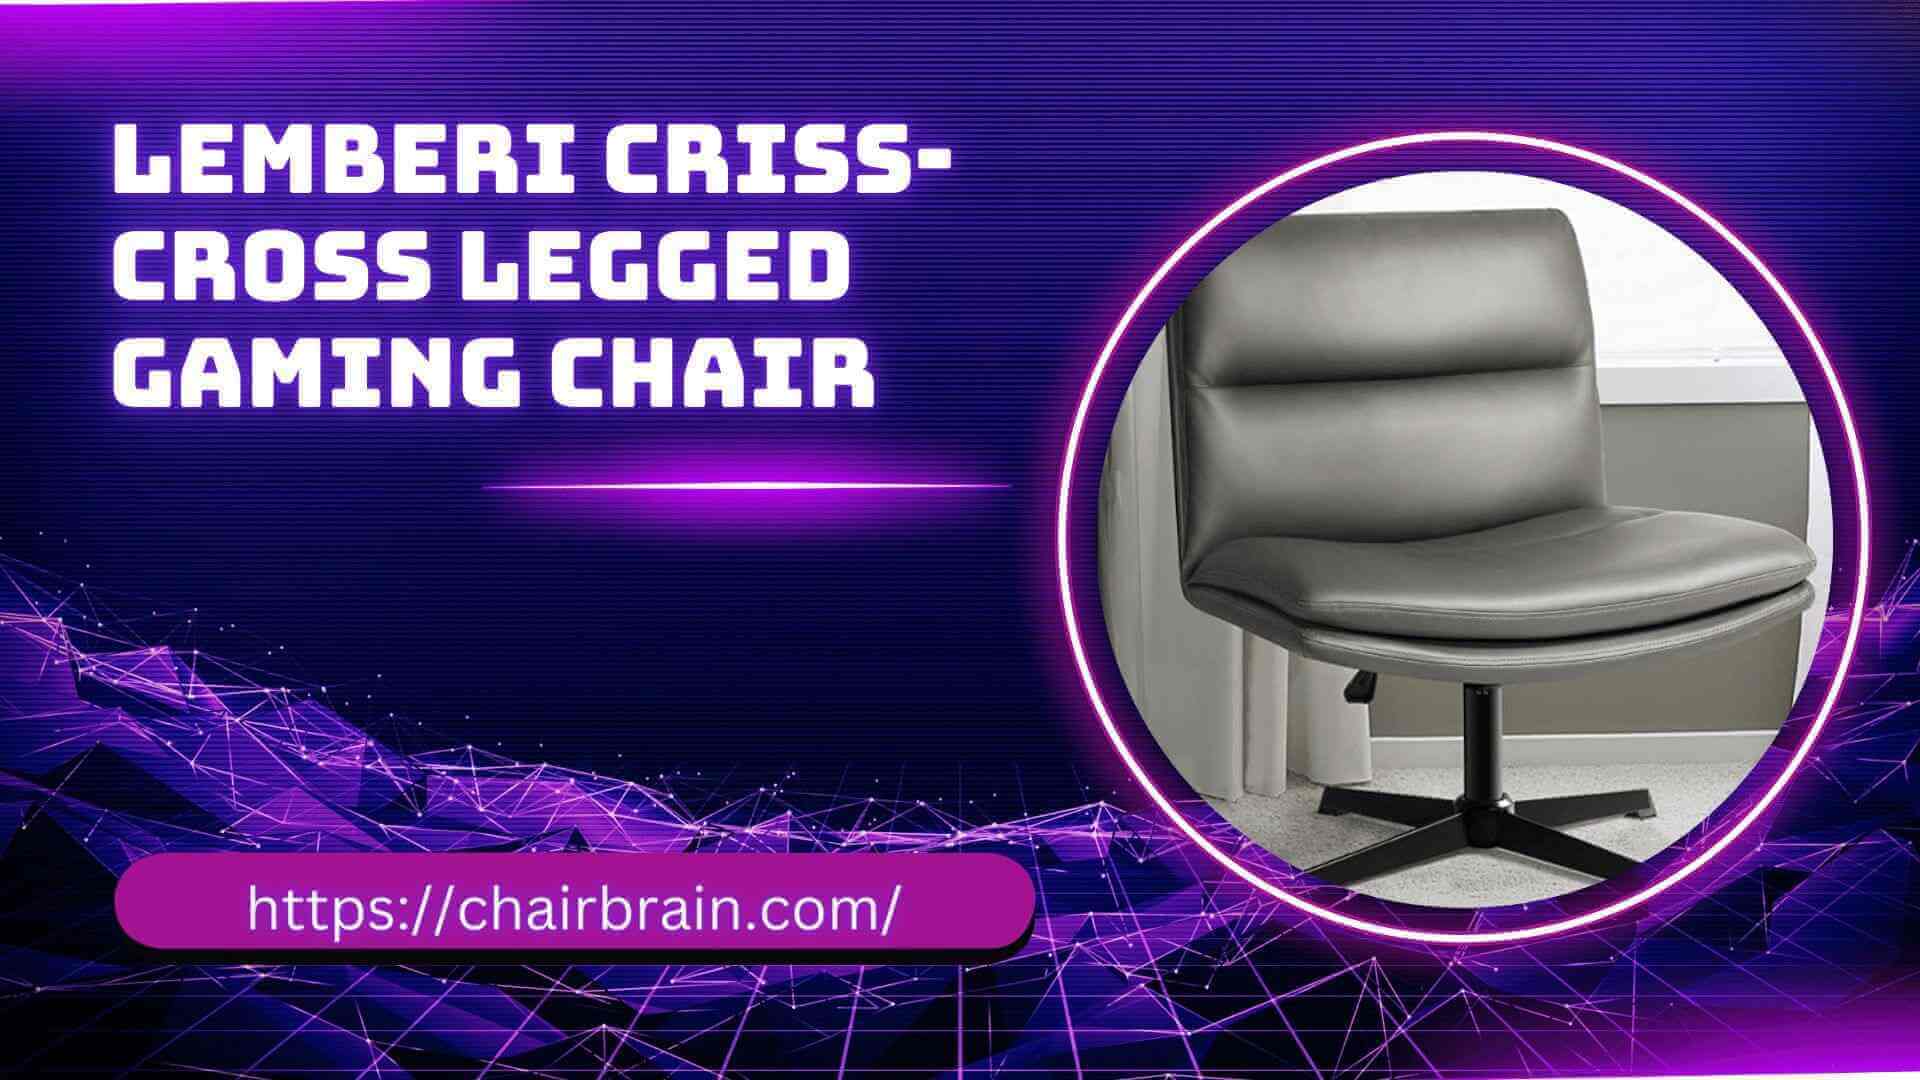 LEMBERI Criss-Cross Legged Gaming Chair